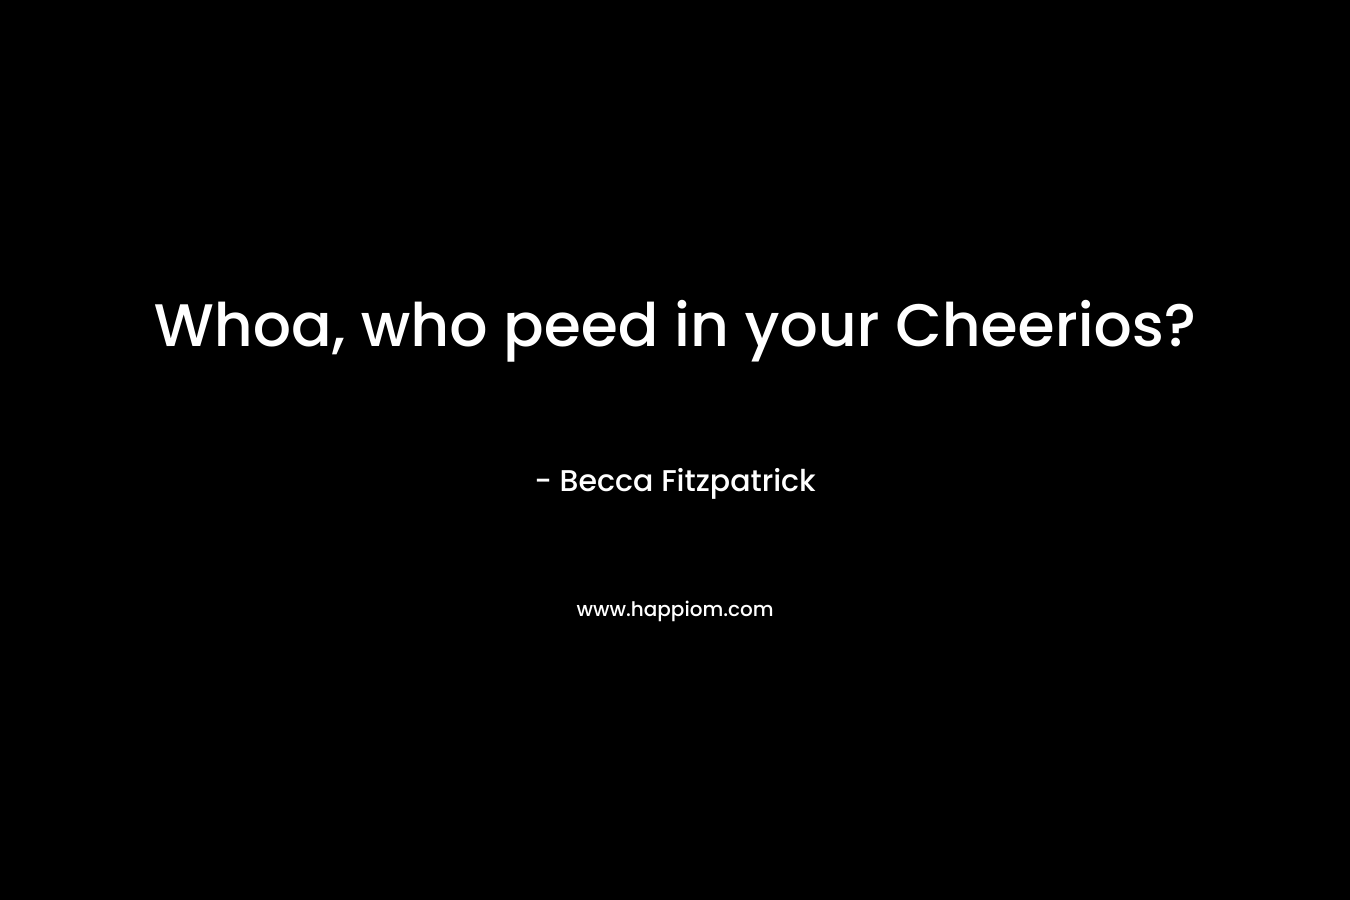 Whoa, who peed in your Cheerios?